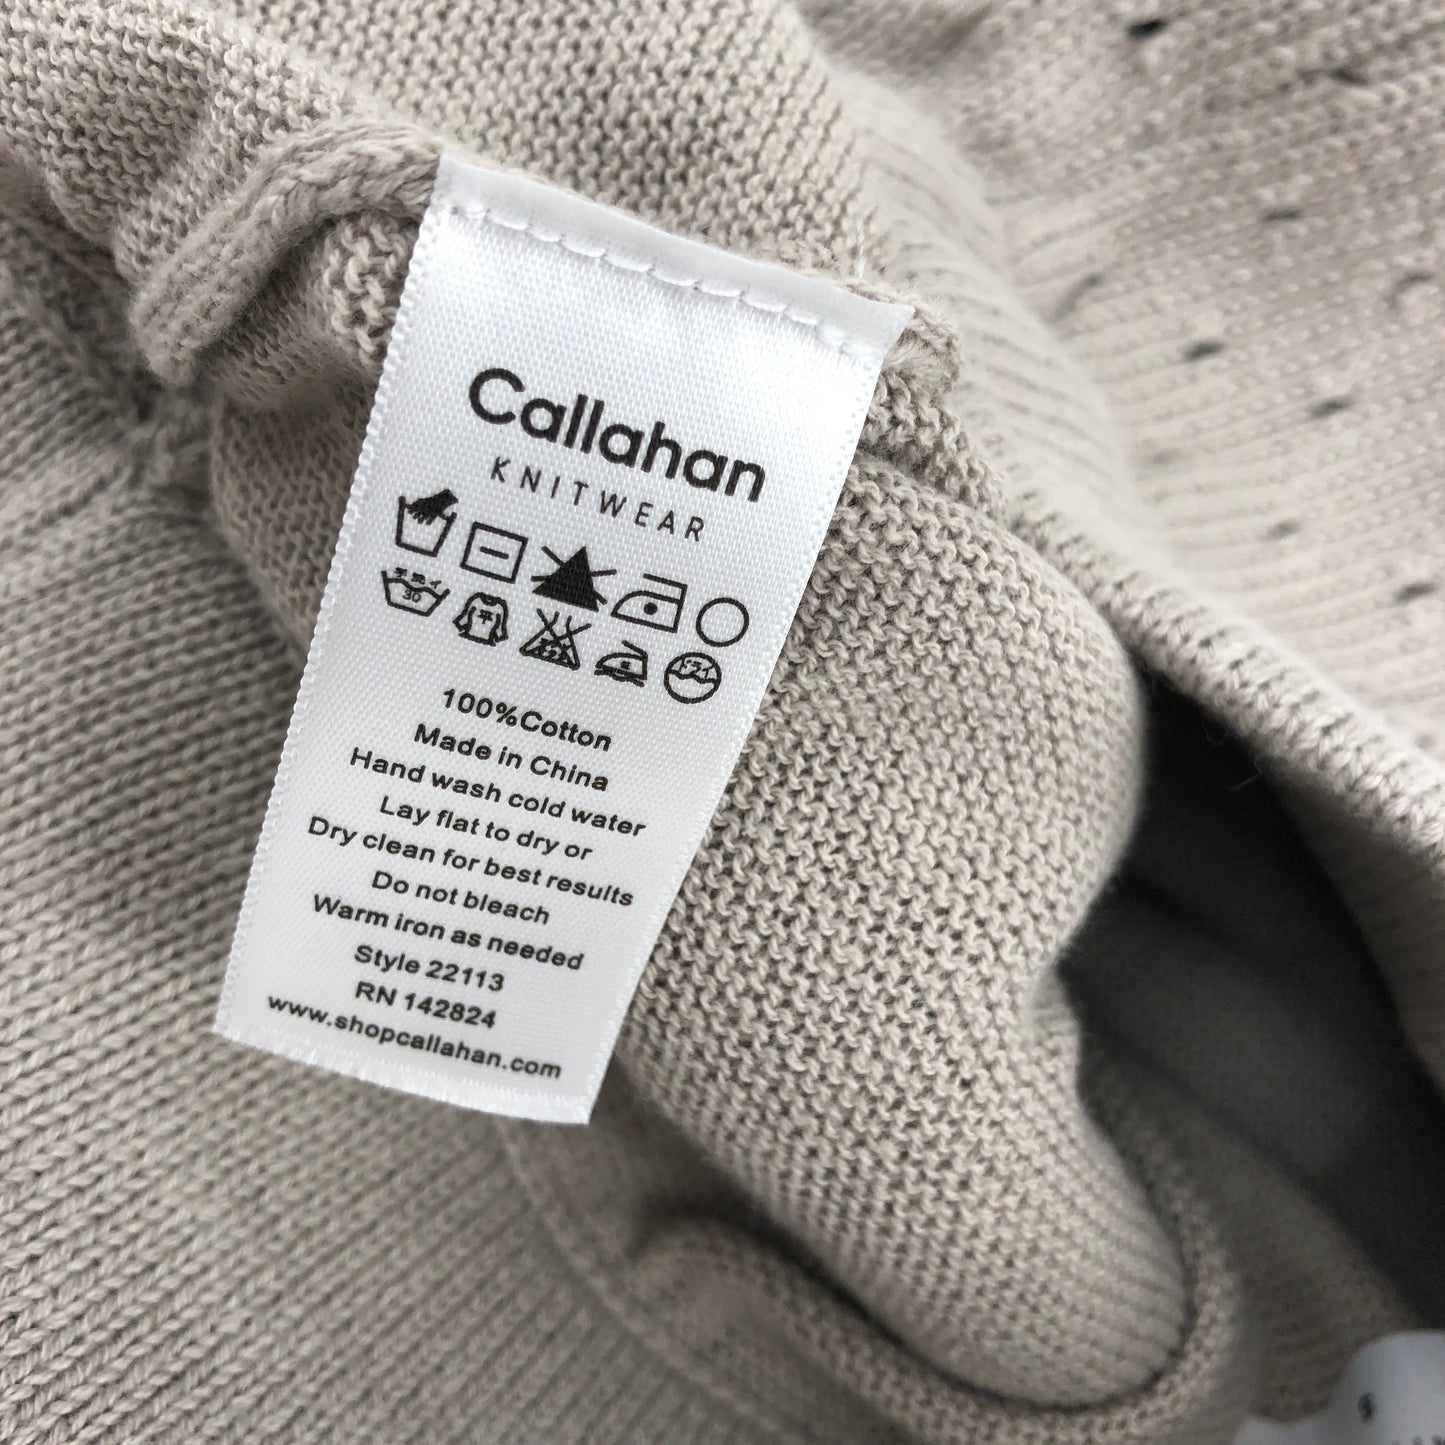 Callahan Knitwear Genny Skirt in Grey Small